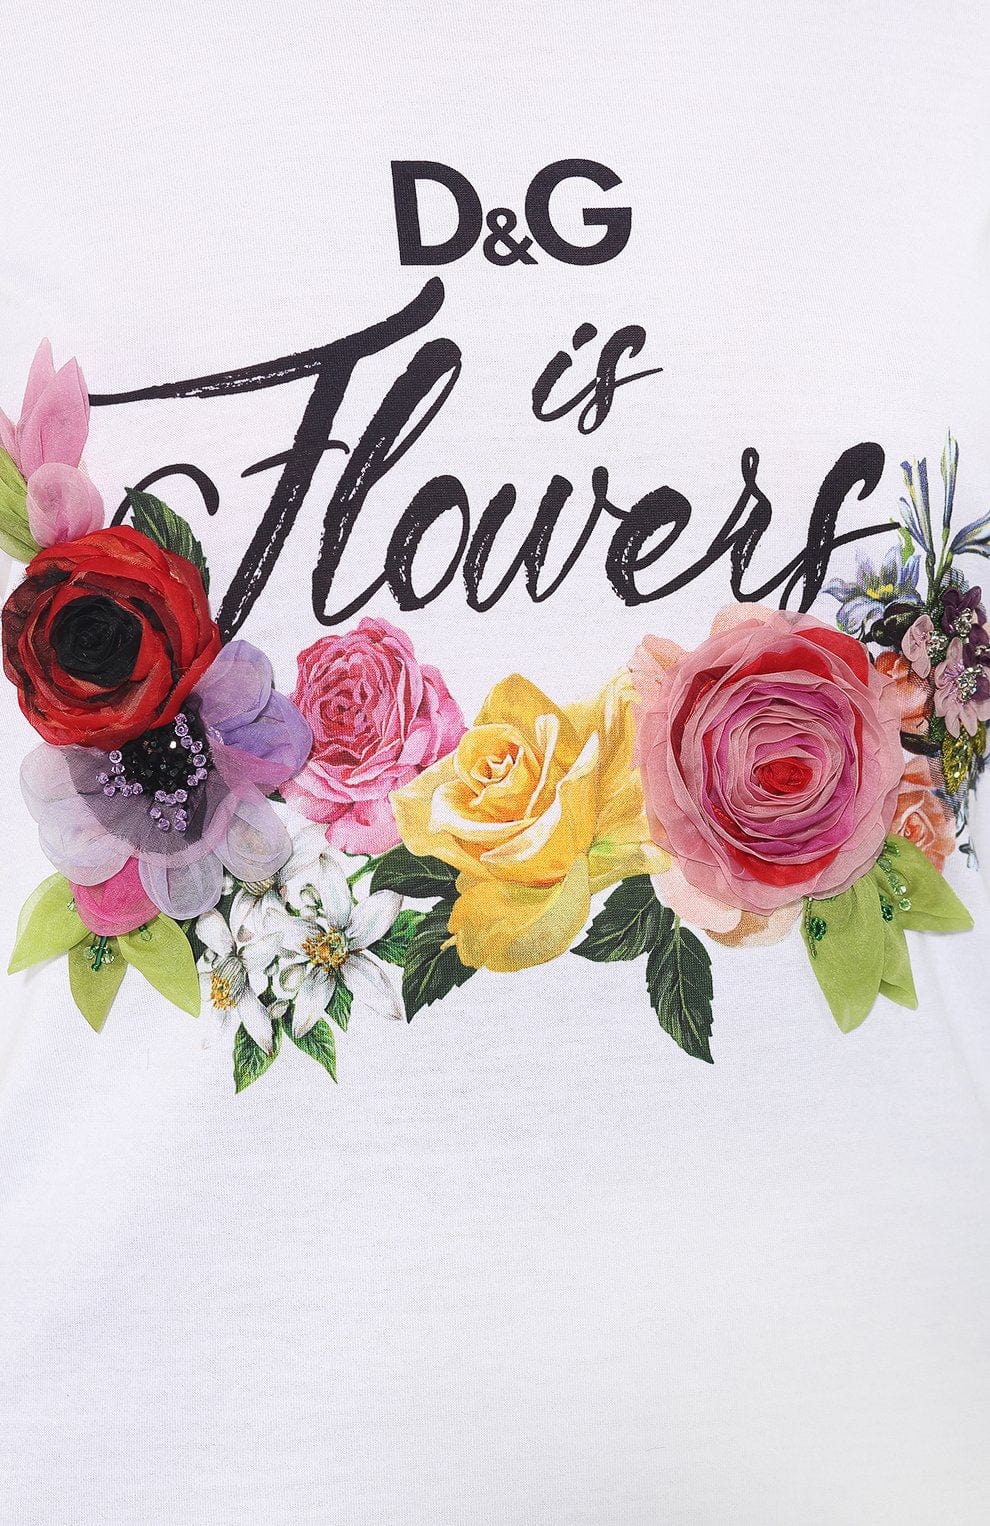 Dolce & Gabbana Floral Appliquéd T-Shirt